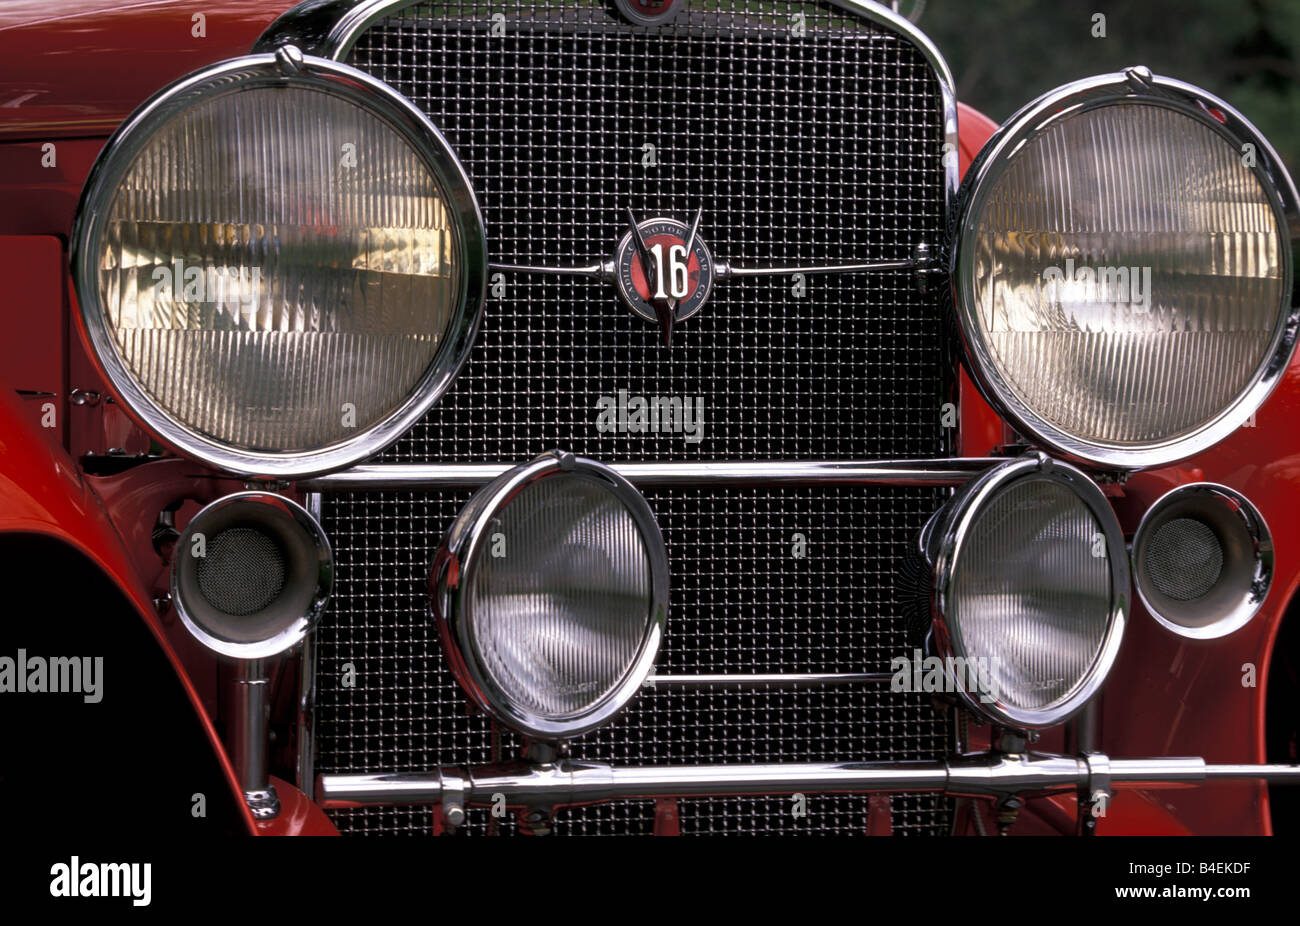 Car, Cadillac V16, vintage car, red, model year 1930-1931, convertible,  1930s, thirties, detail, details, headlights, headlight Stock Photo